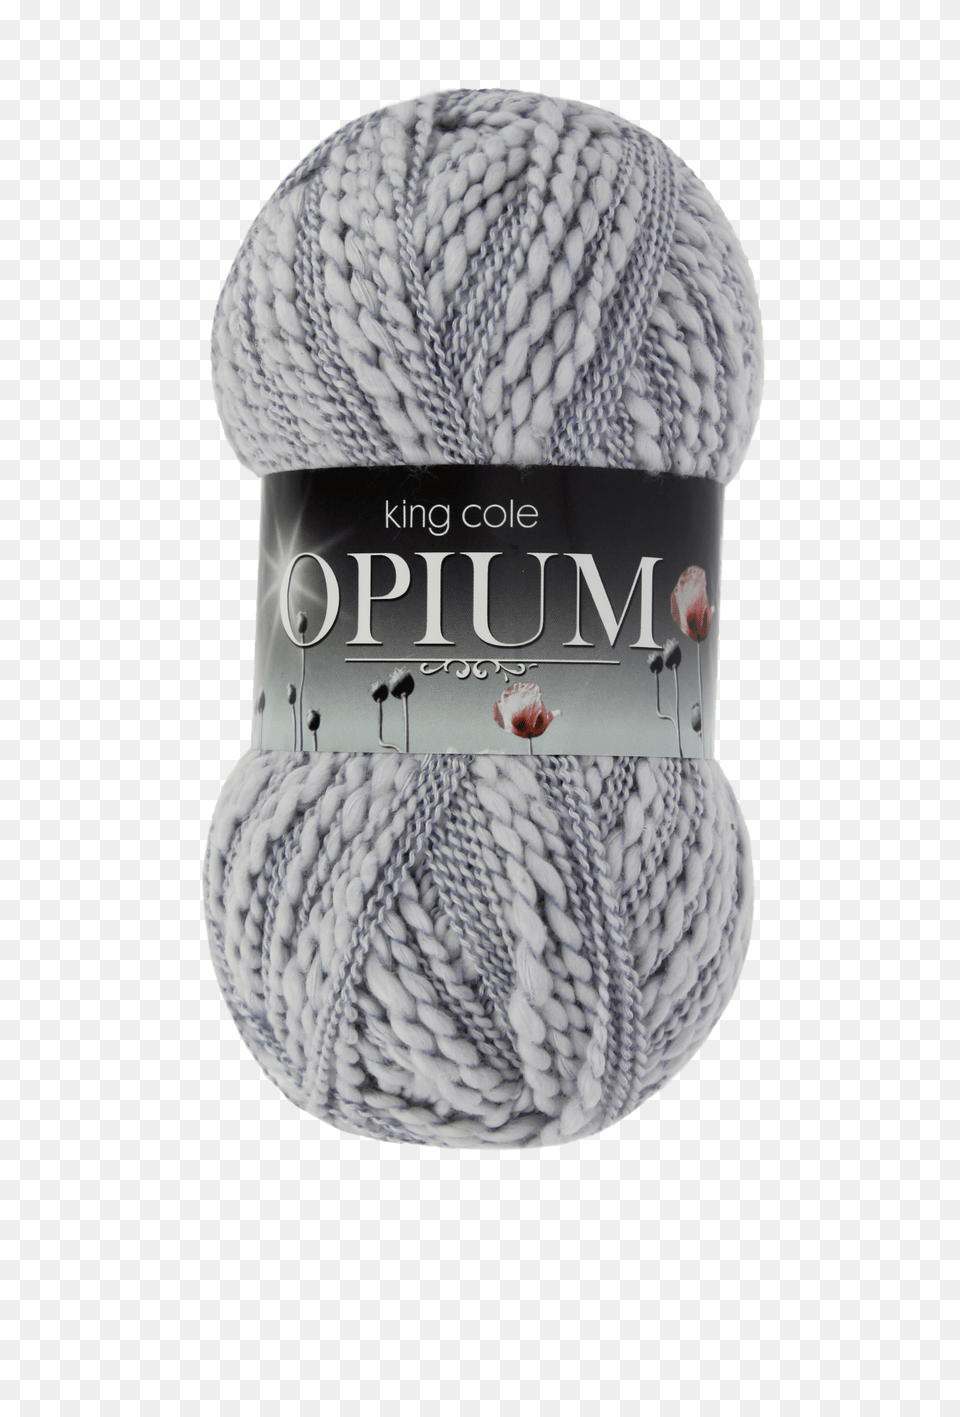 Download King Cole Opium Knitting Yarn Love Wallpapers For Desktop Png Image